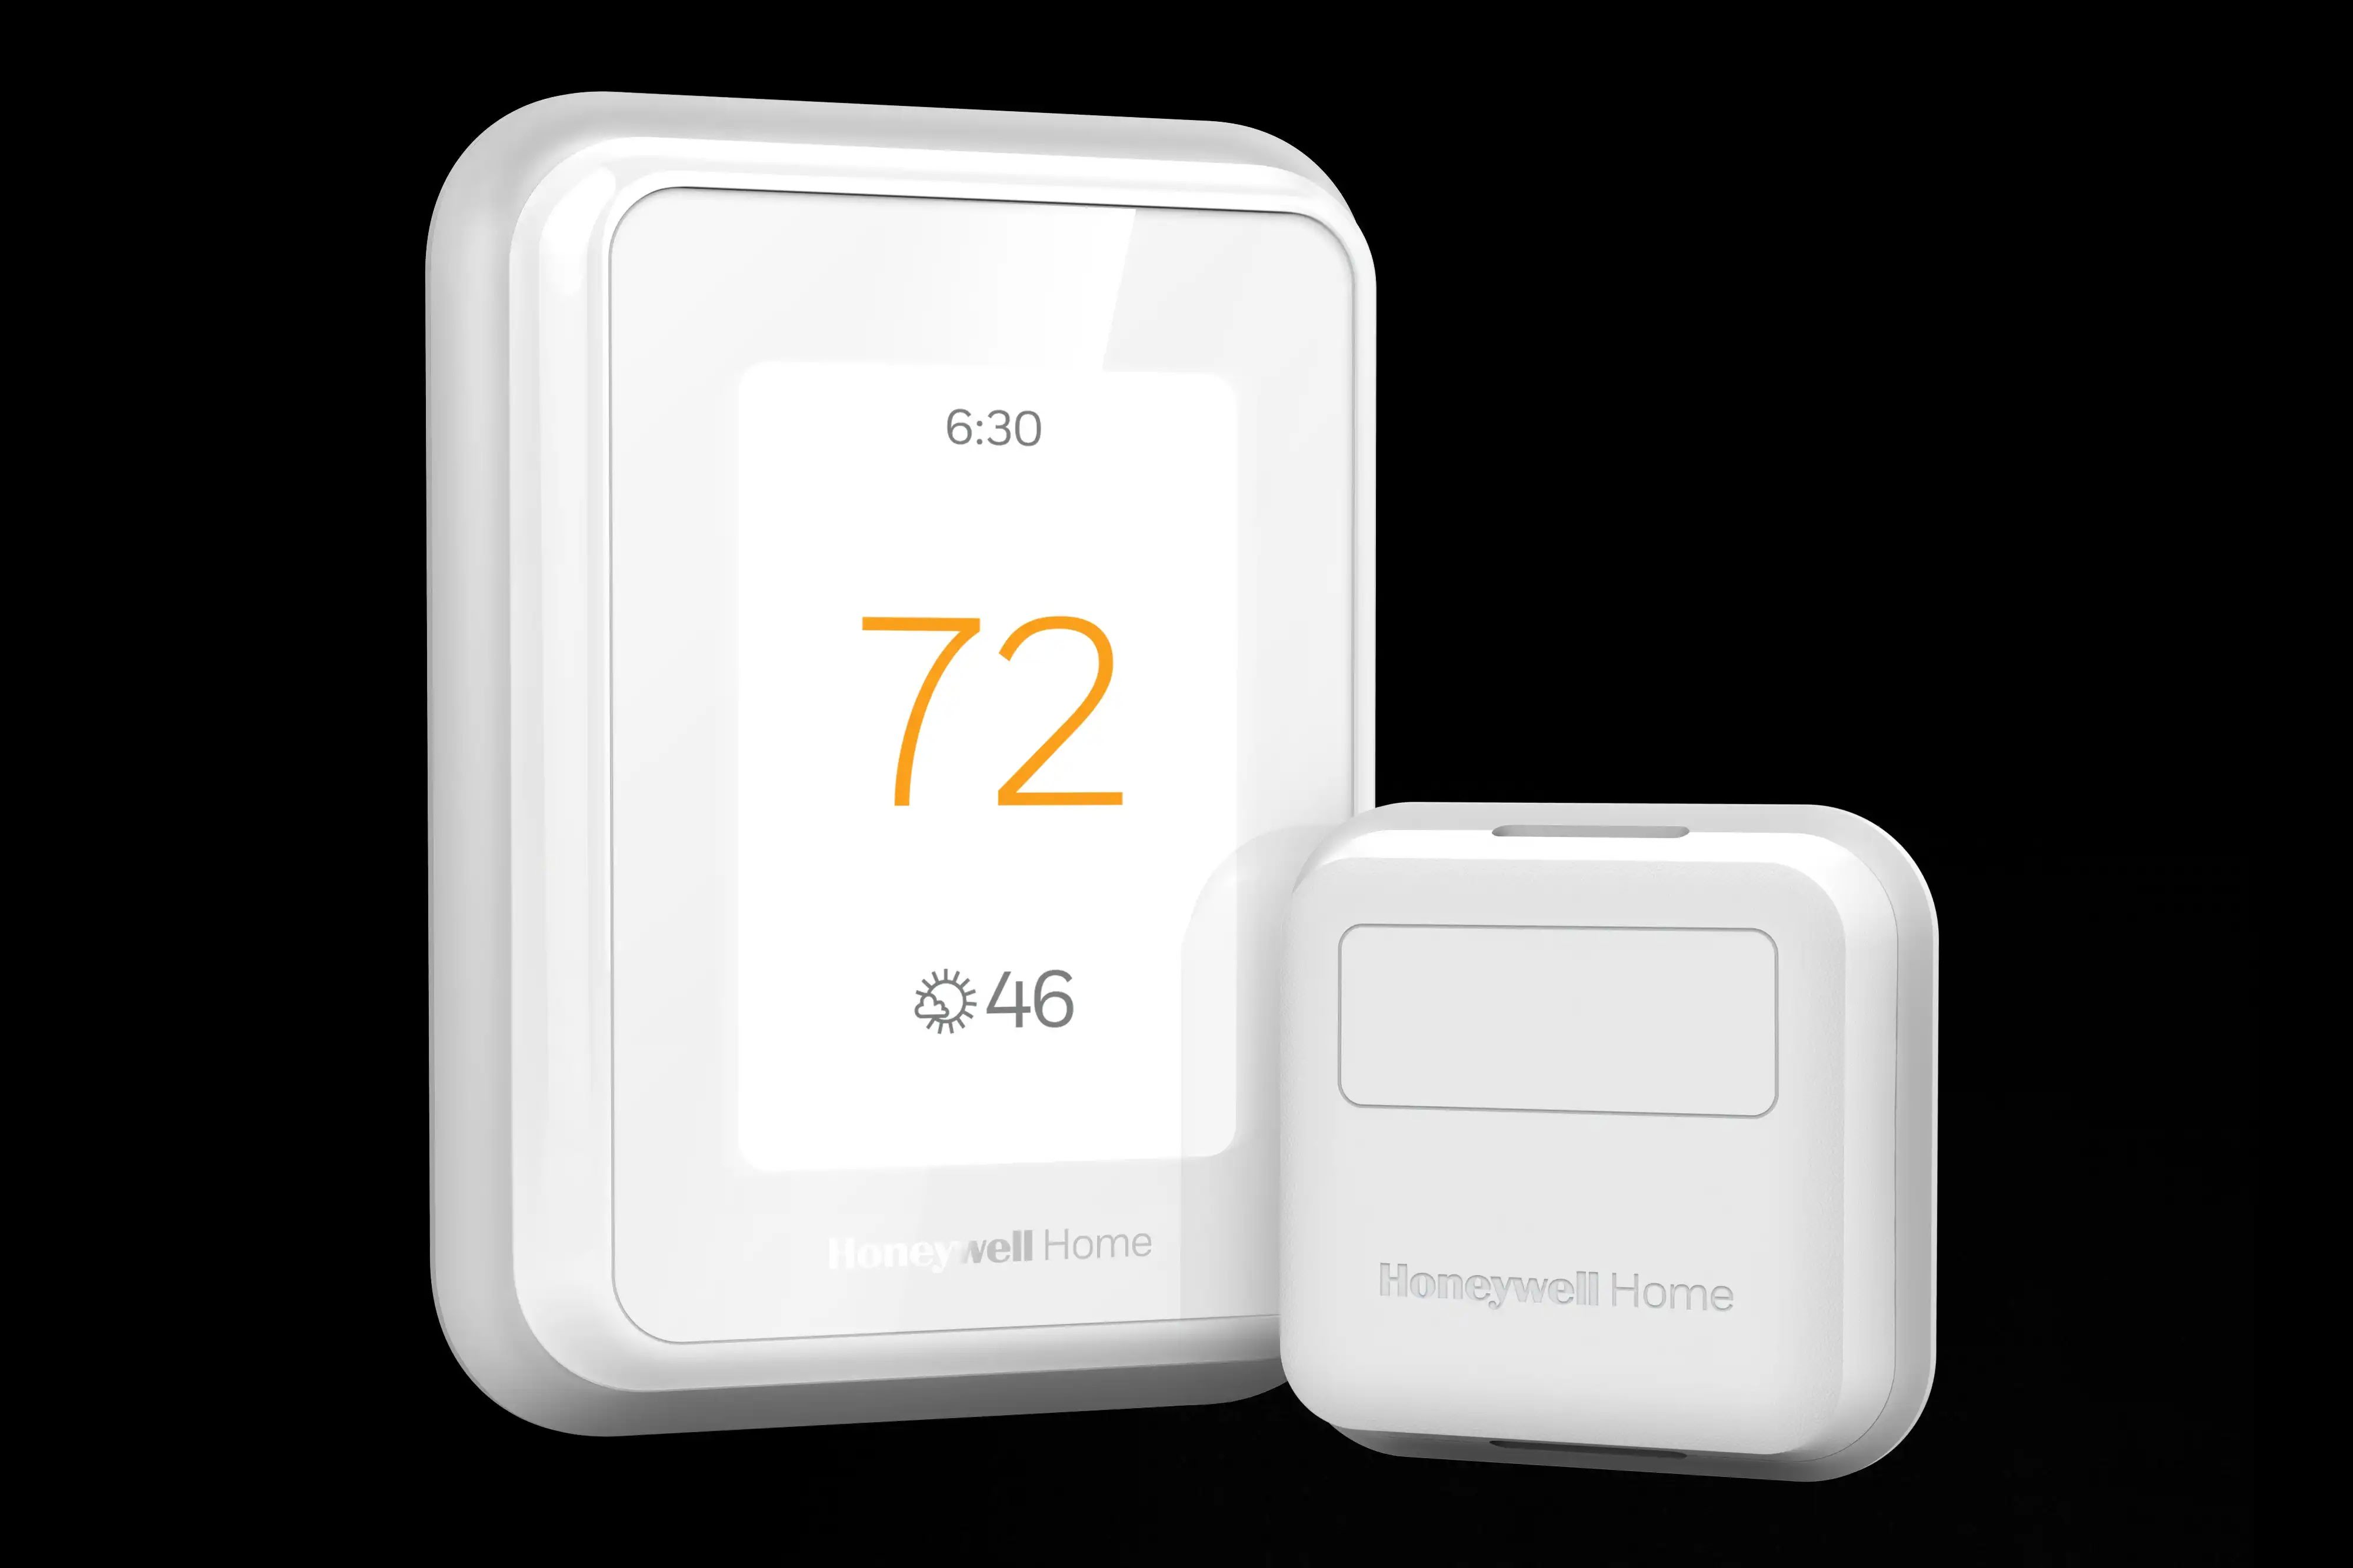 Honeywell C7189U1005 - Room Temperature Sensor